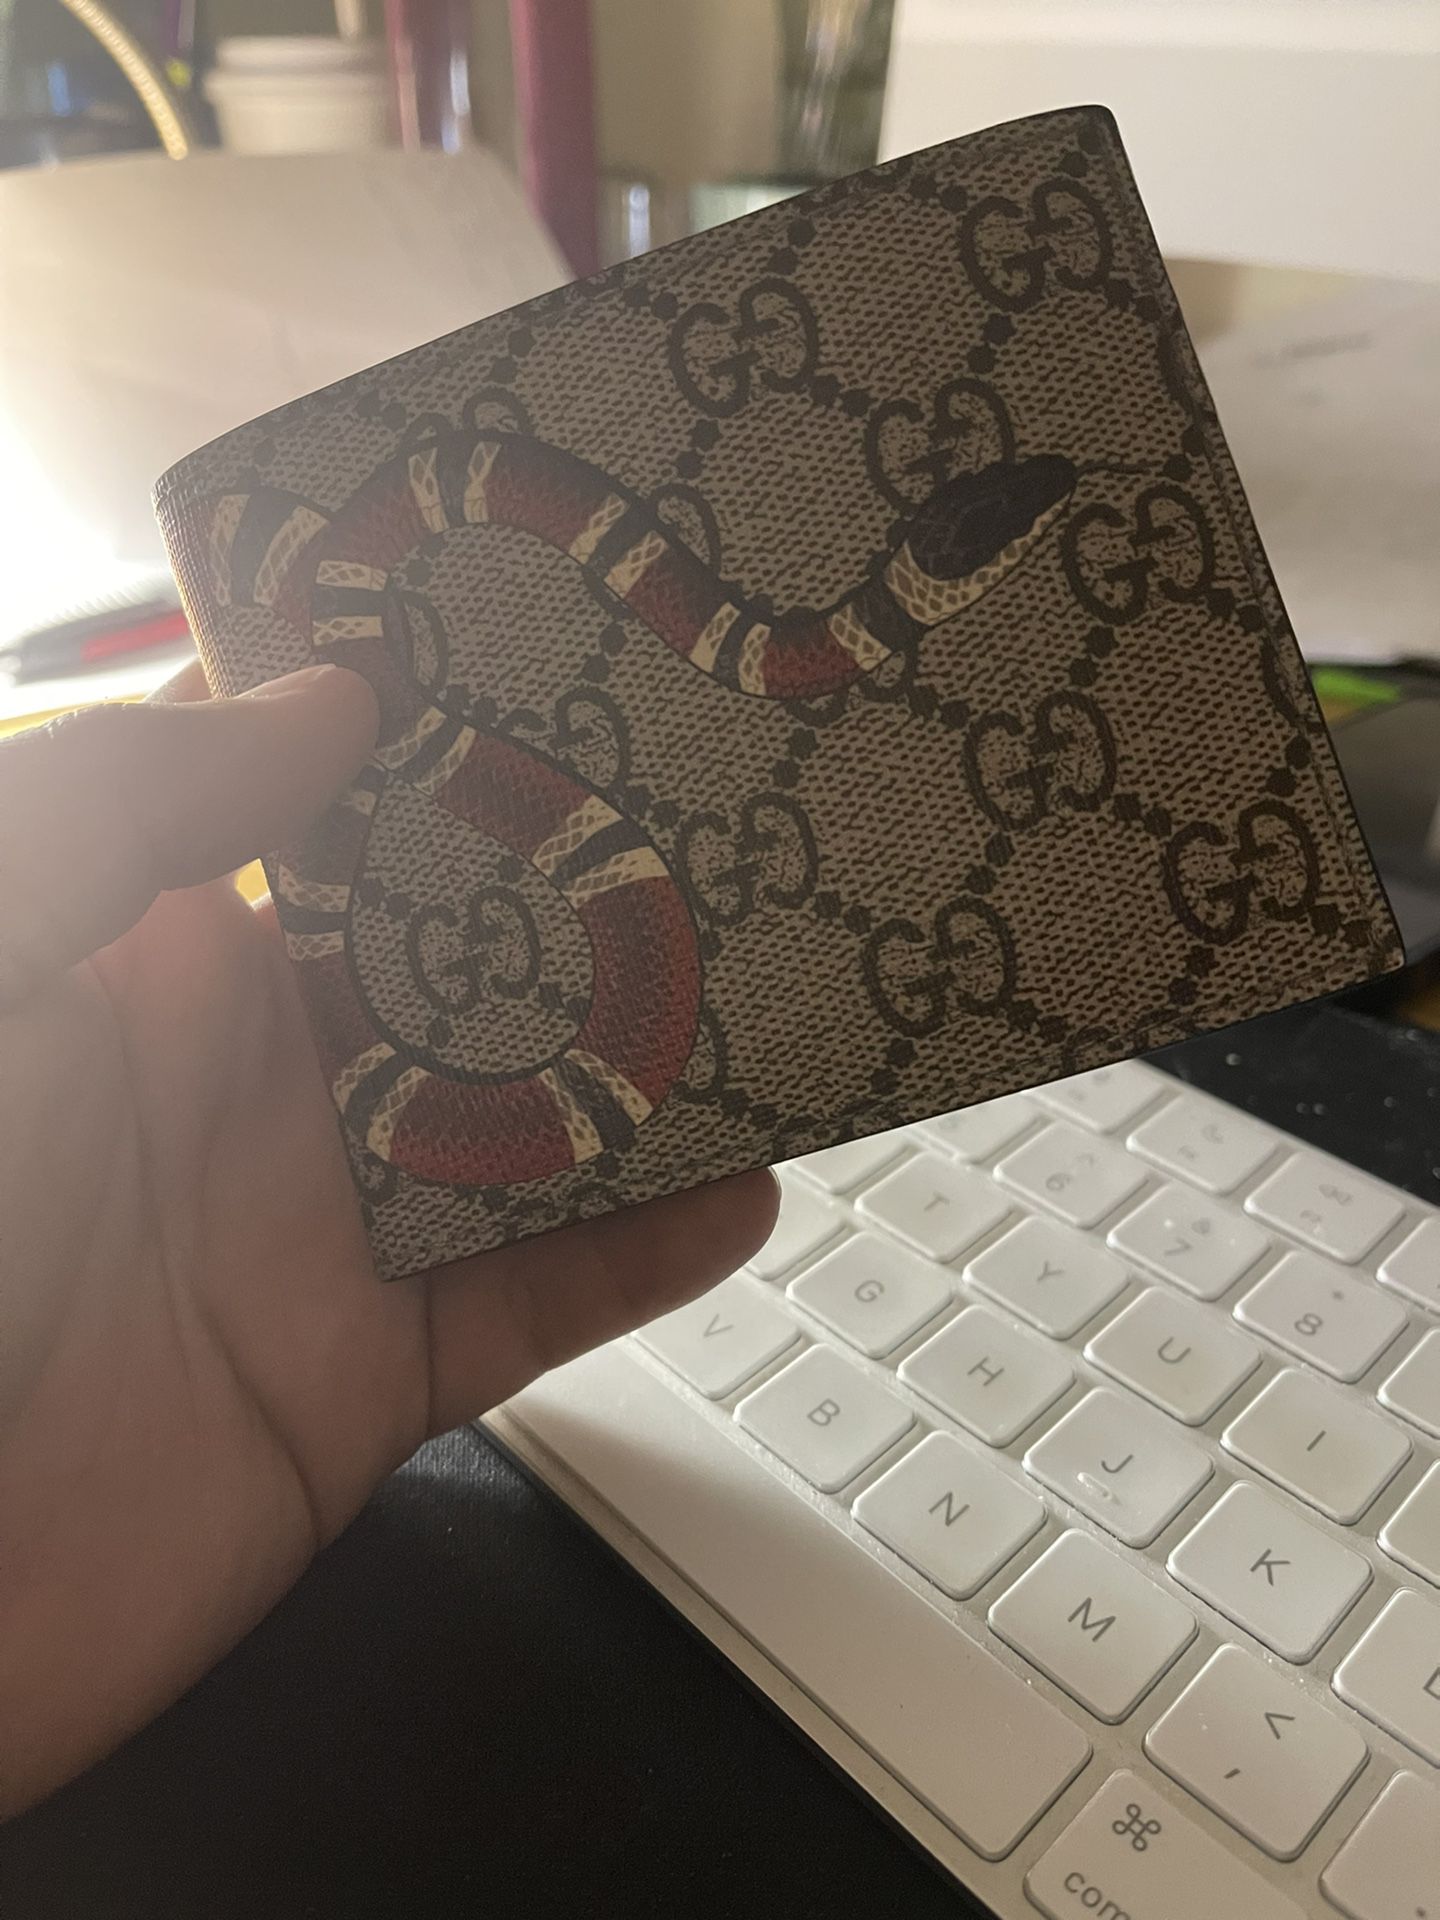 Gucci King Snake GG Supreme Wallet - ShopStyle